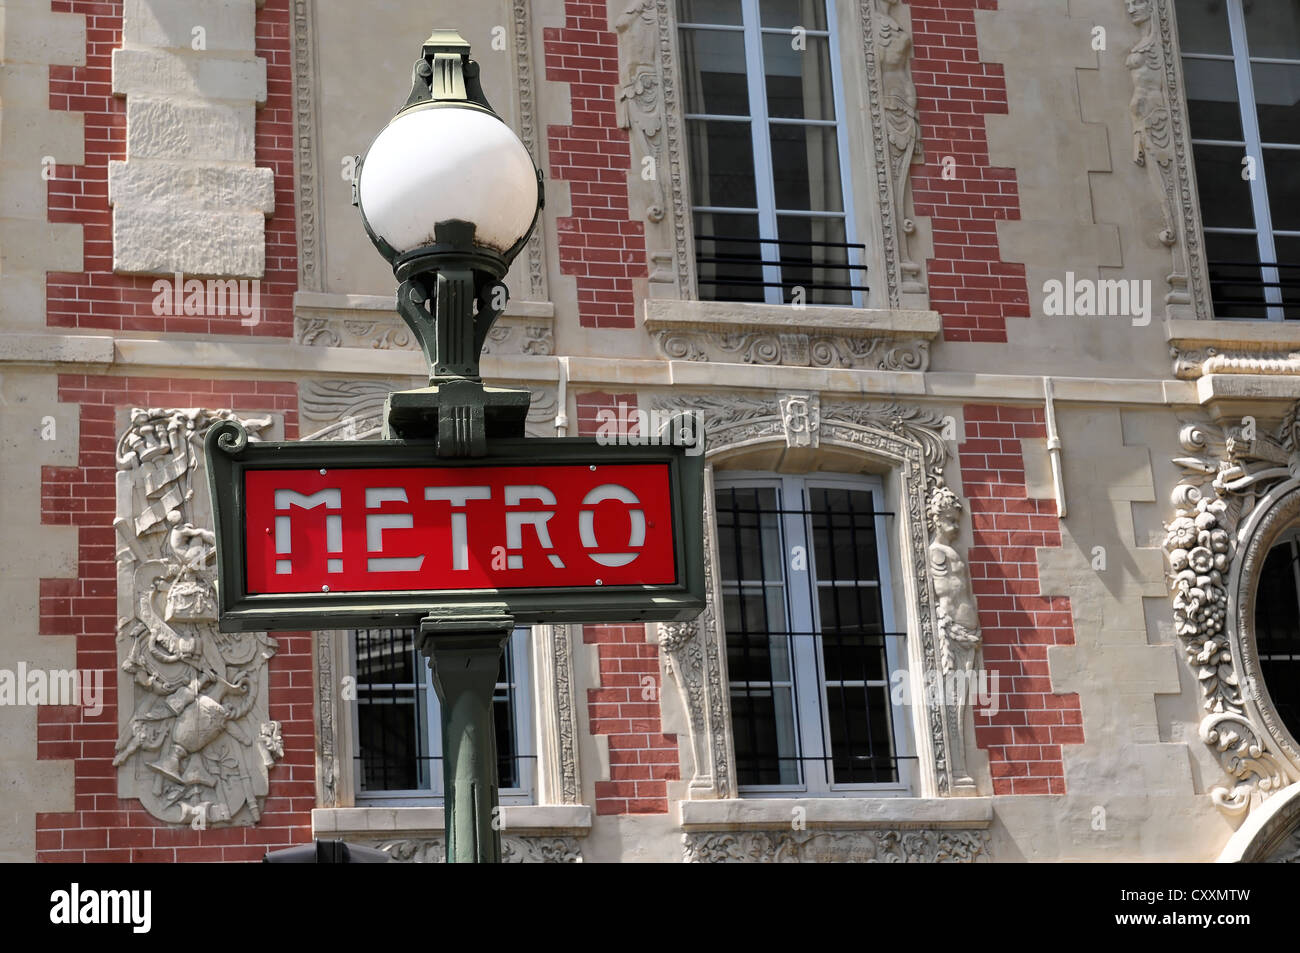 Art Nouveau sign with a lamp, Metro, Paris, France, Europe Stock Photo